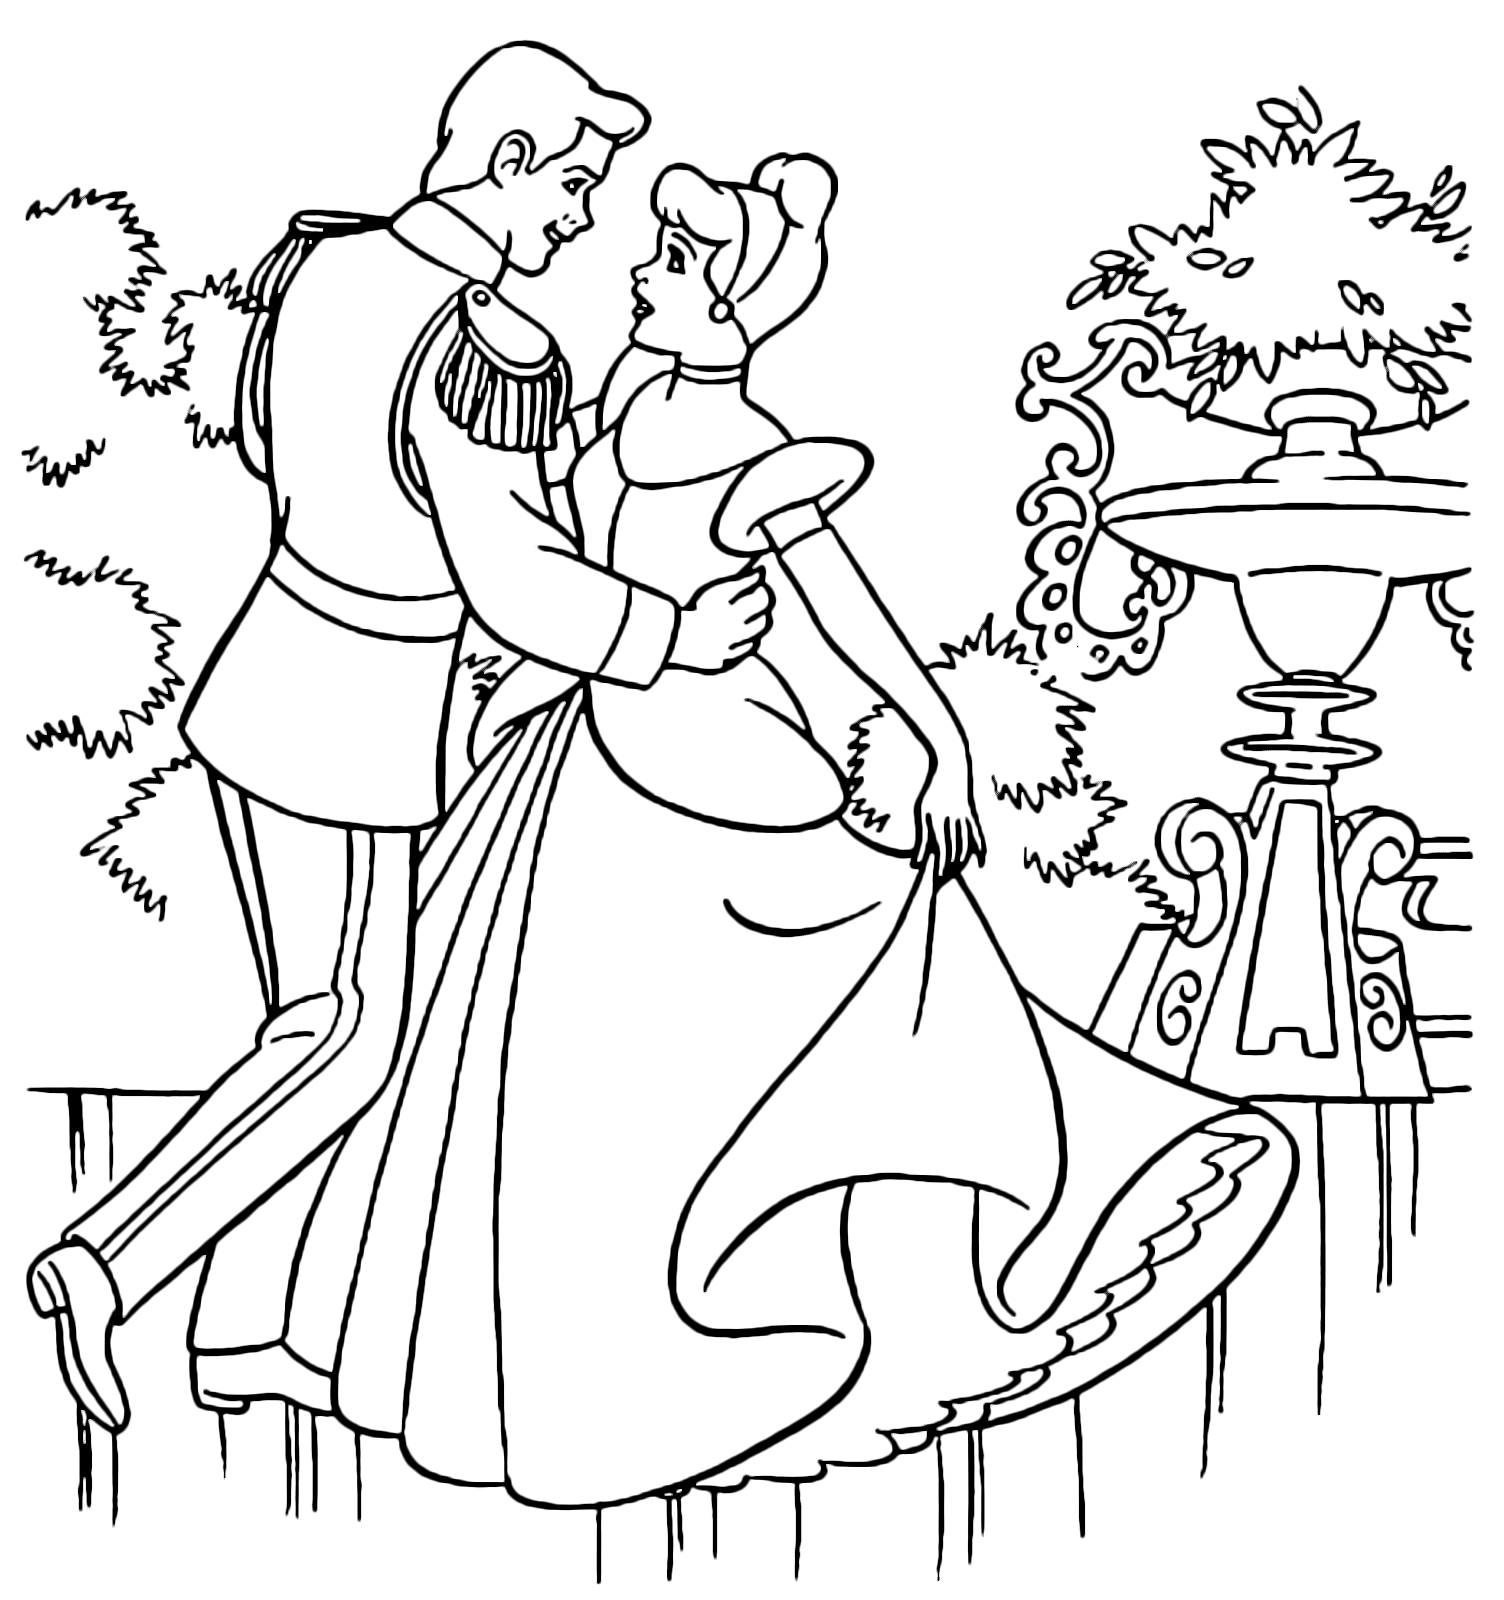 Cenerentola - Cenerentola balla con il Principe